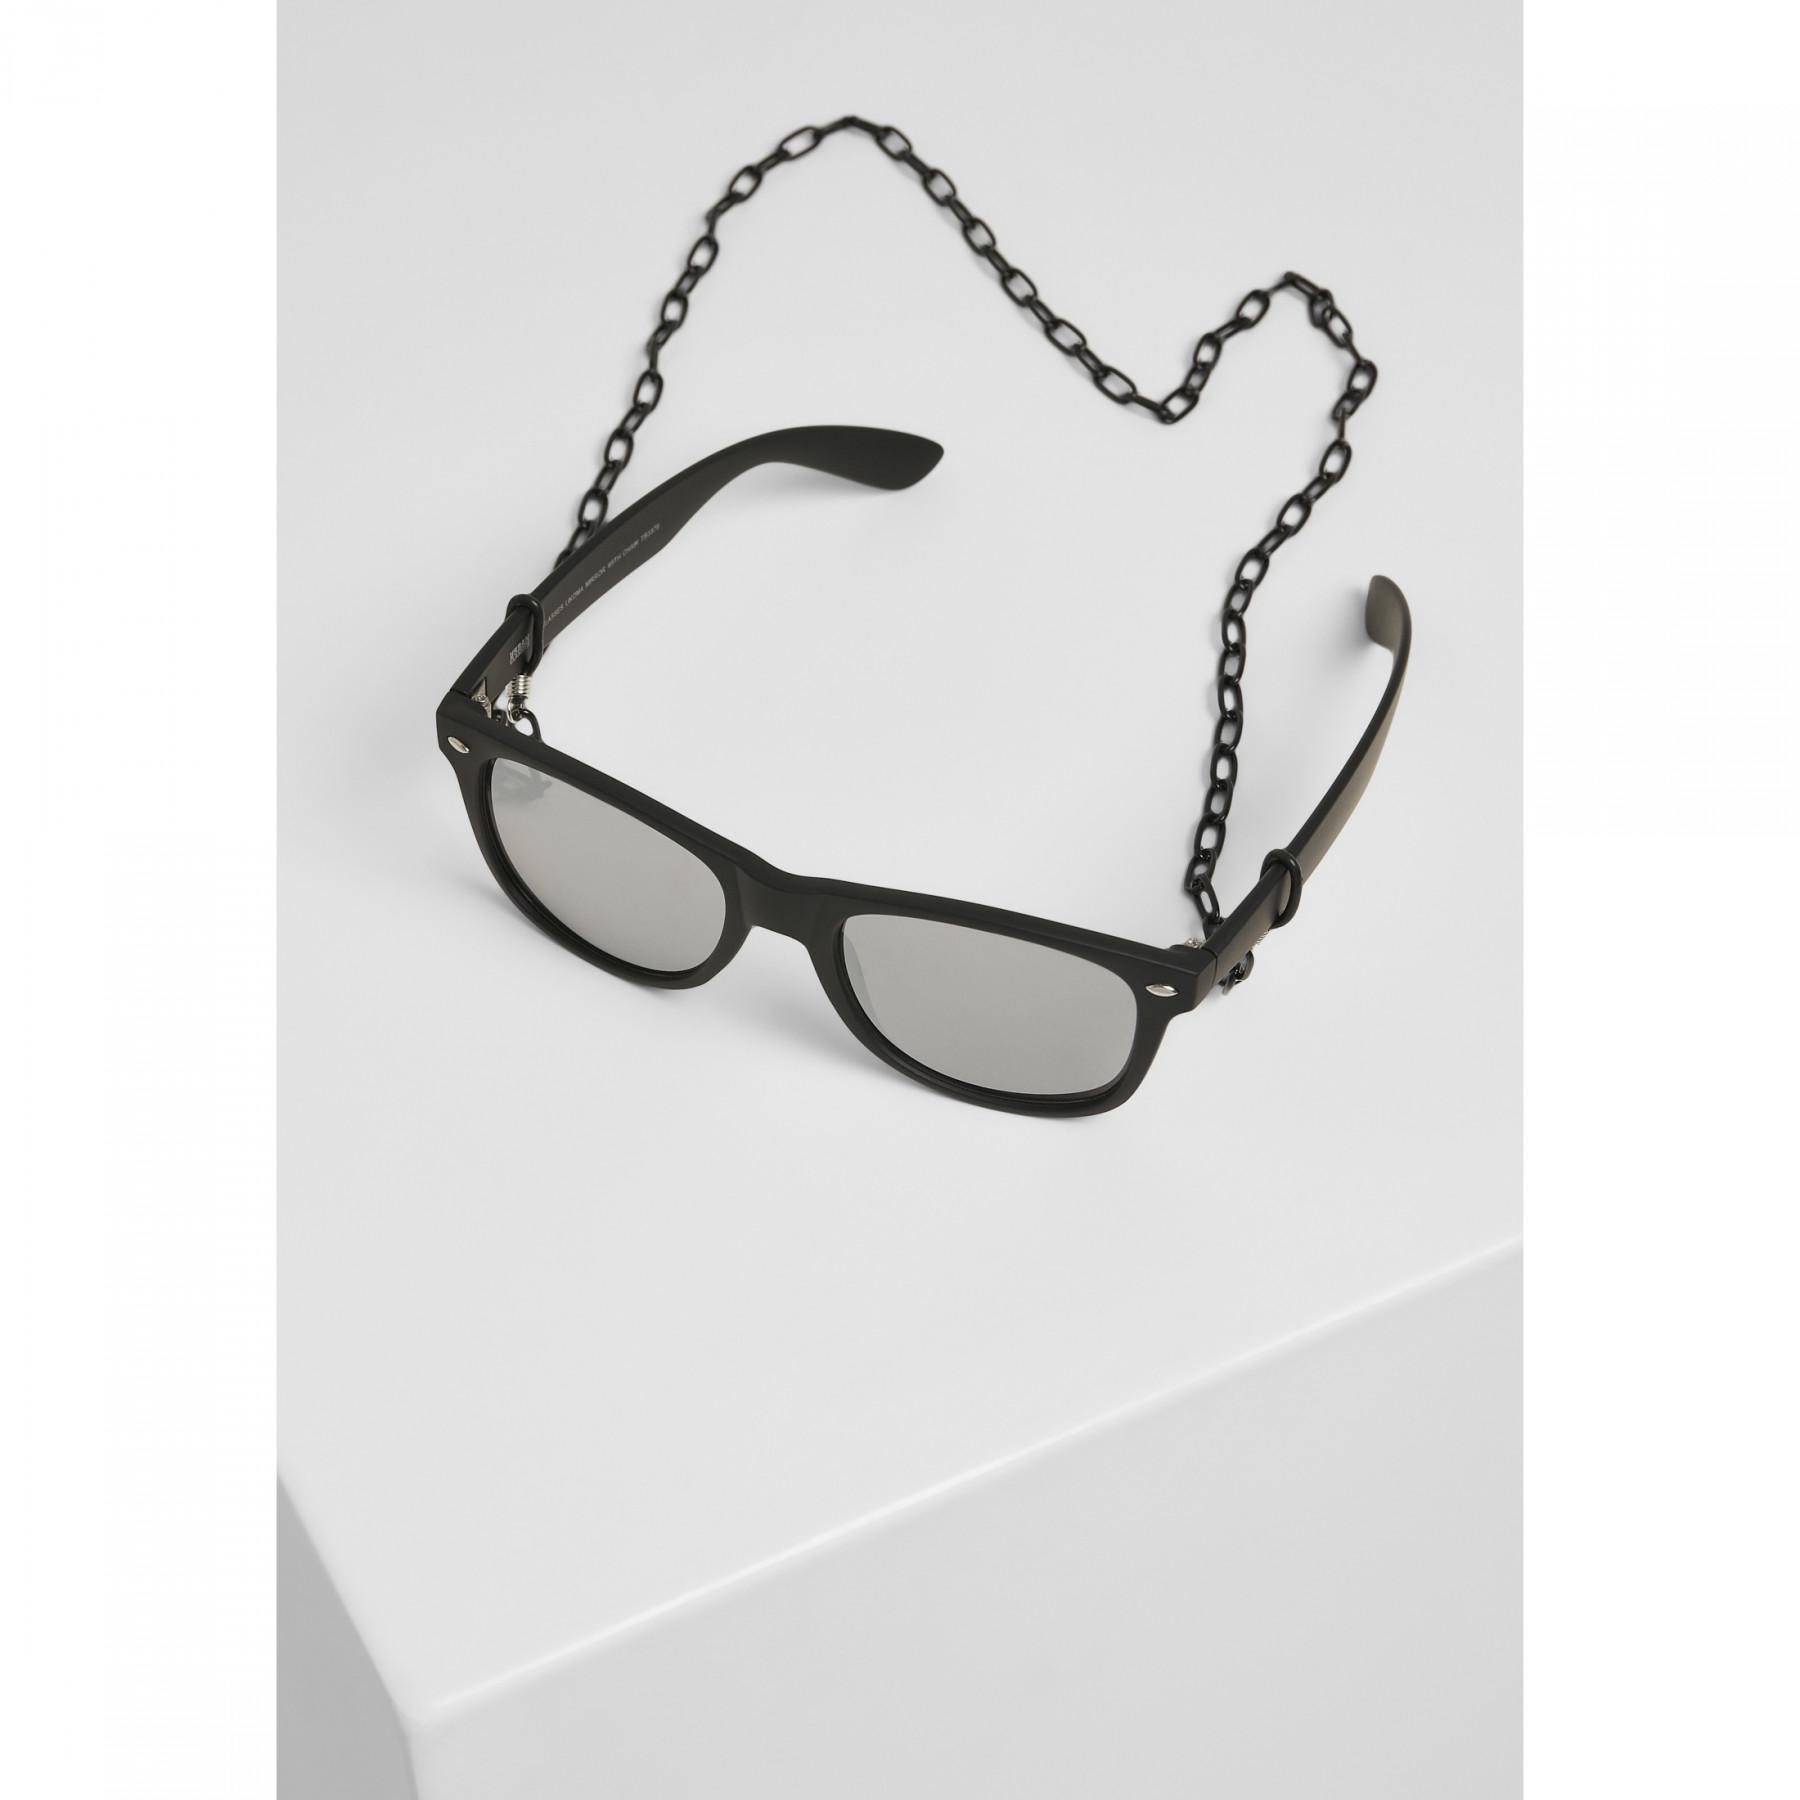 Urban Classic likoma mirror sunglasses